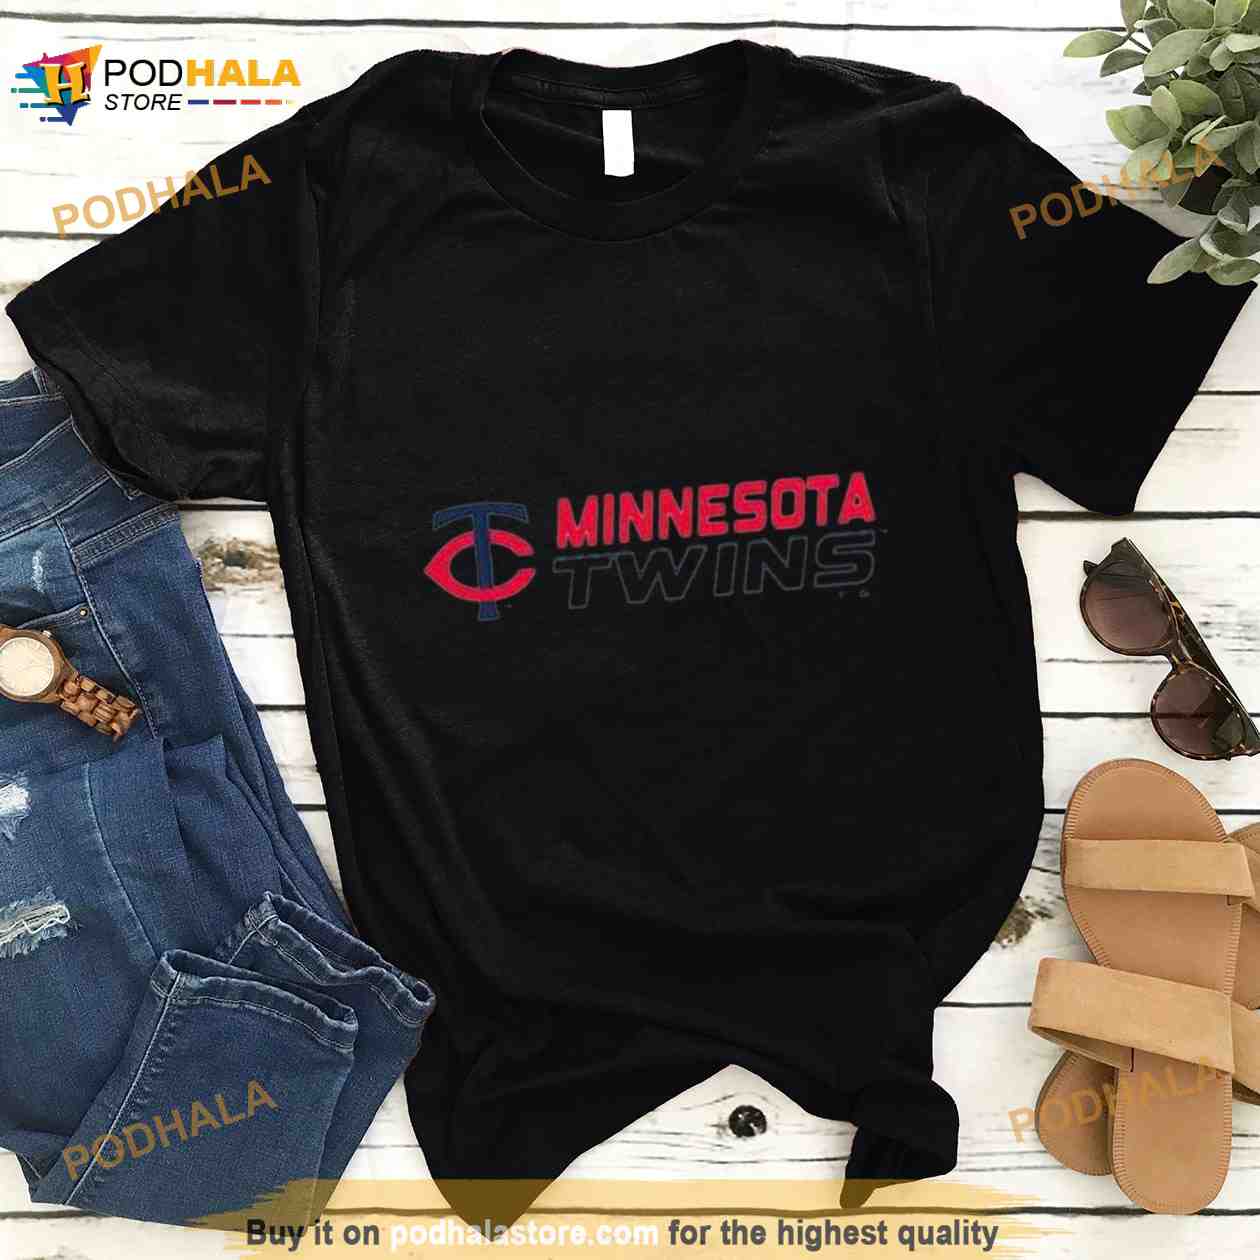 Minnesota Twins Shop, Twins Merchandise, Apparel, Store